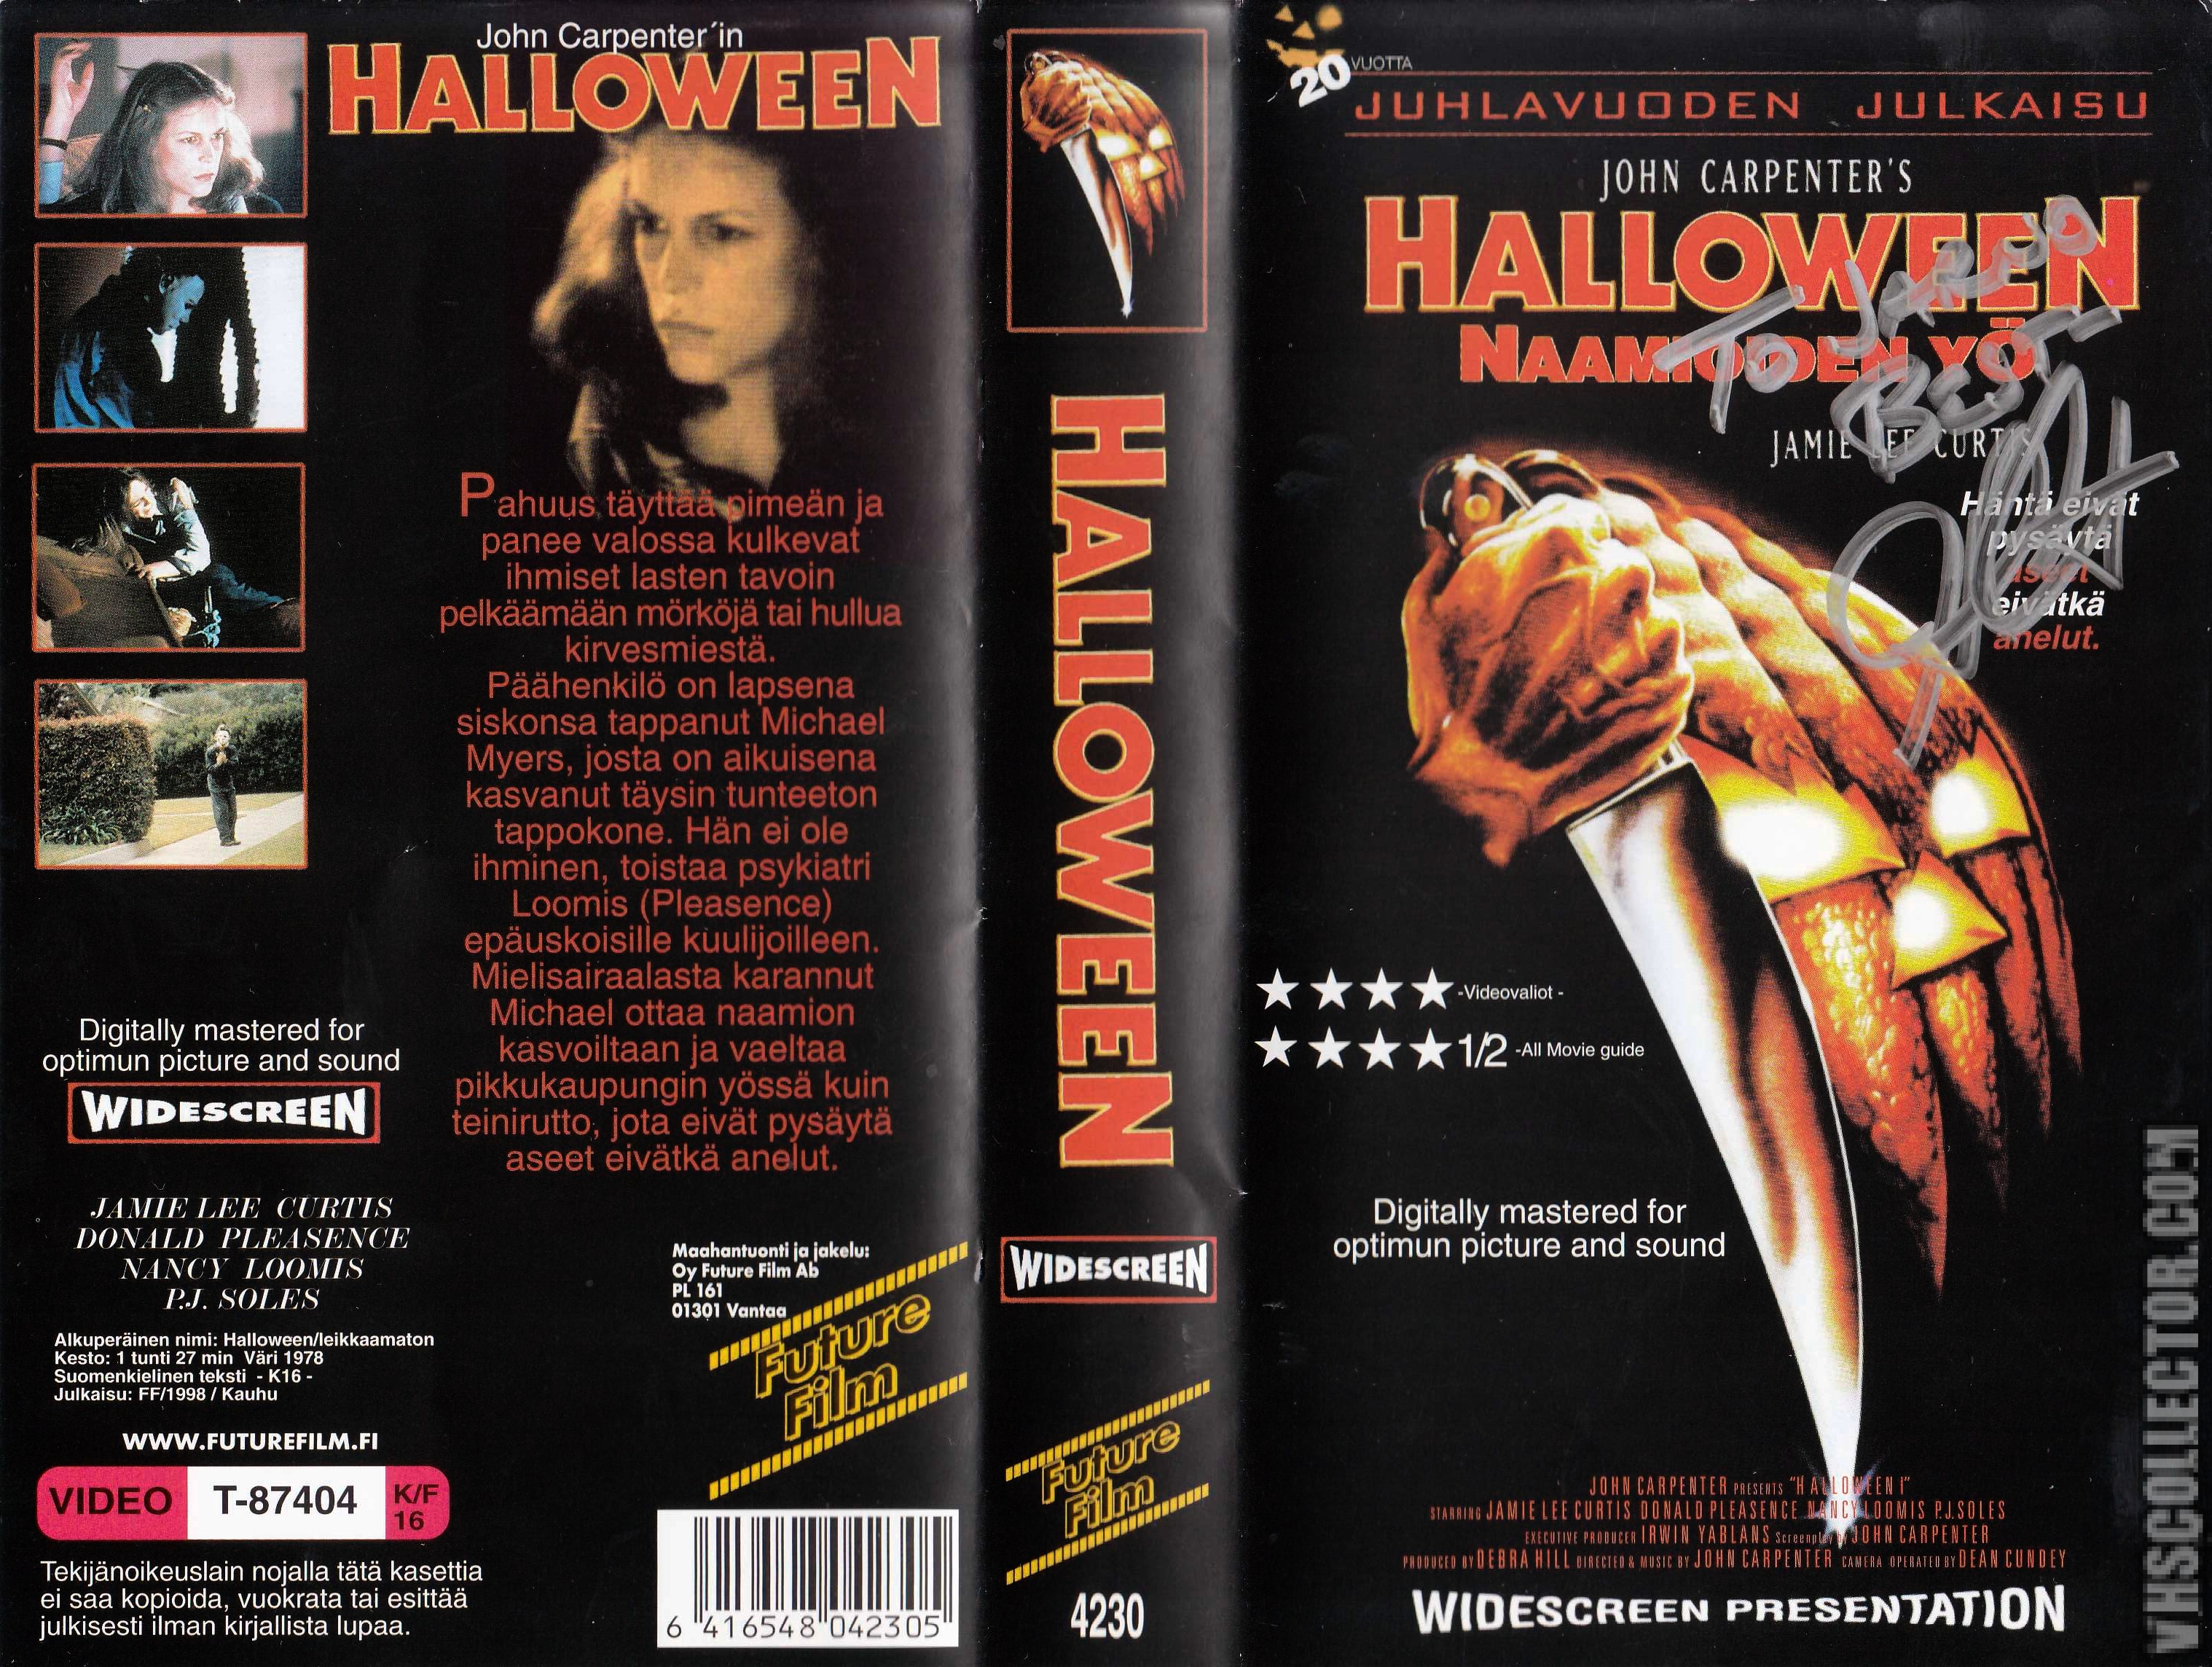 Halloween - Naamioiden Yö | VHSCollector.com